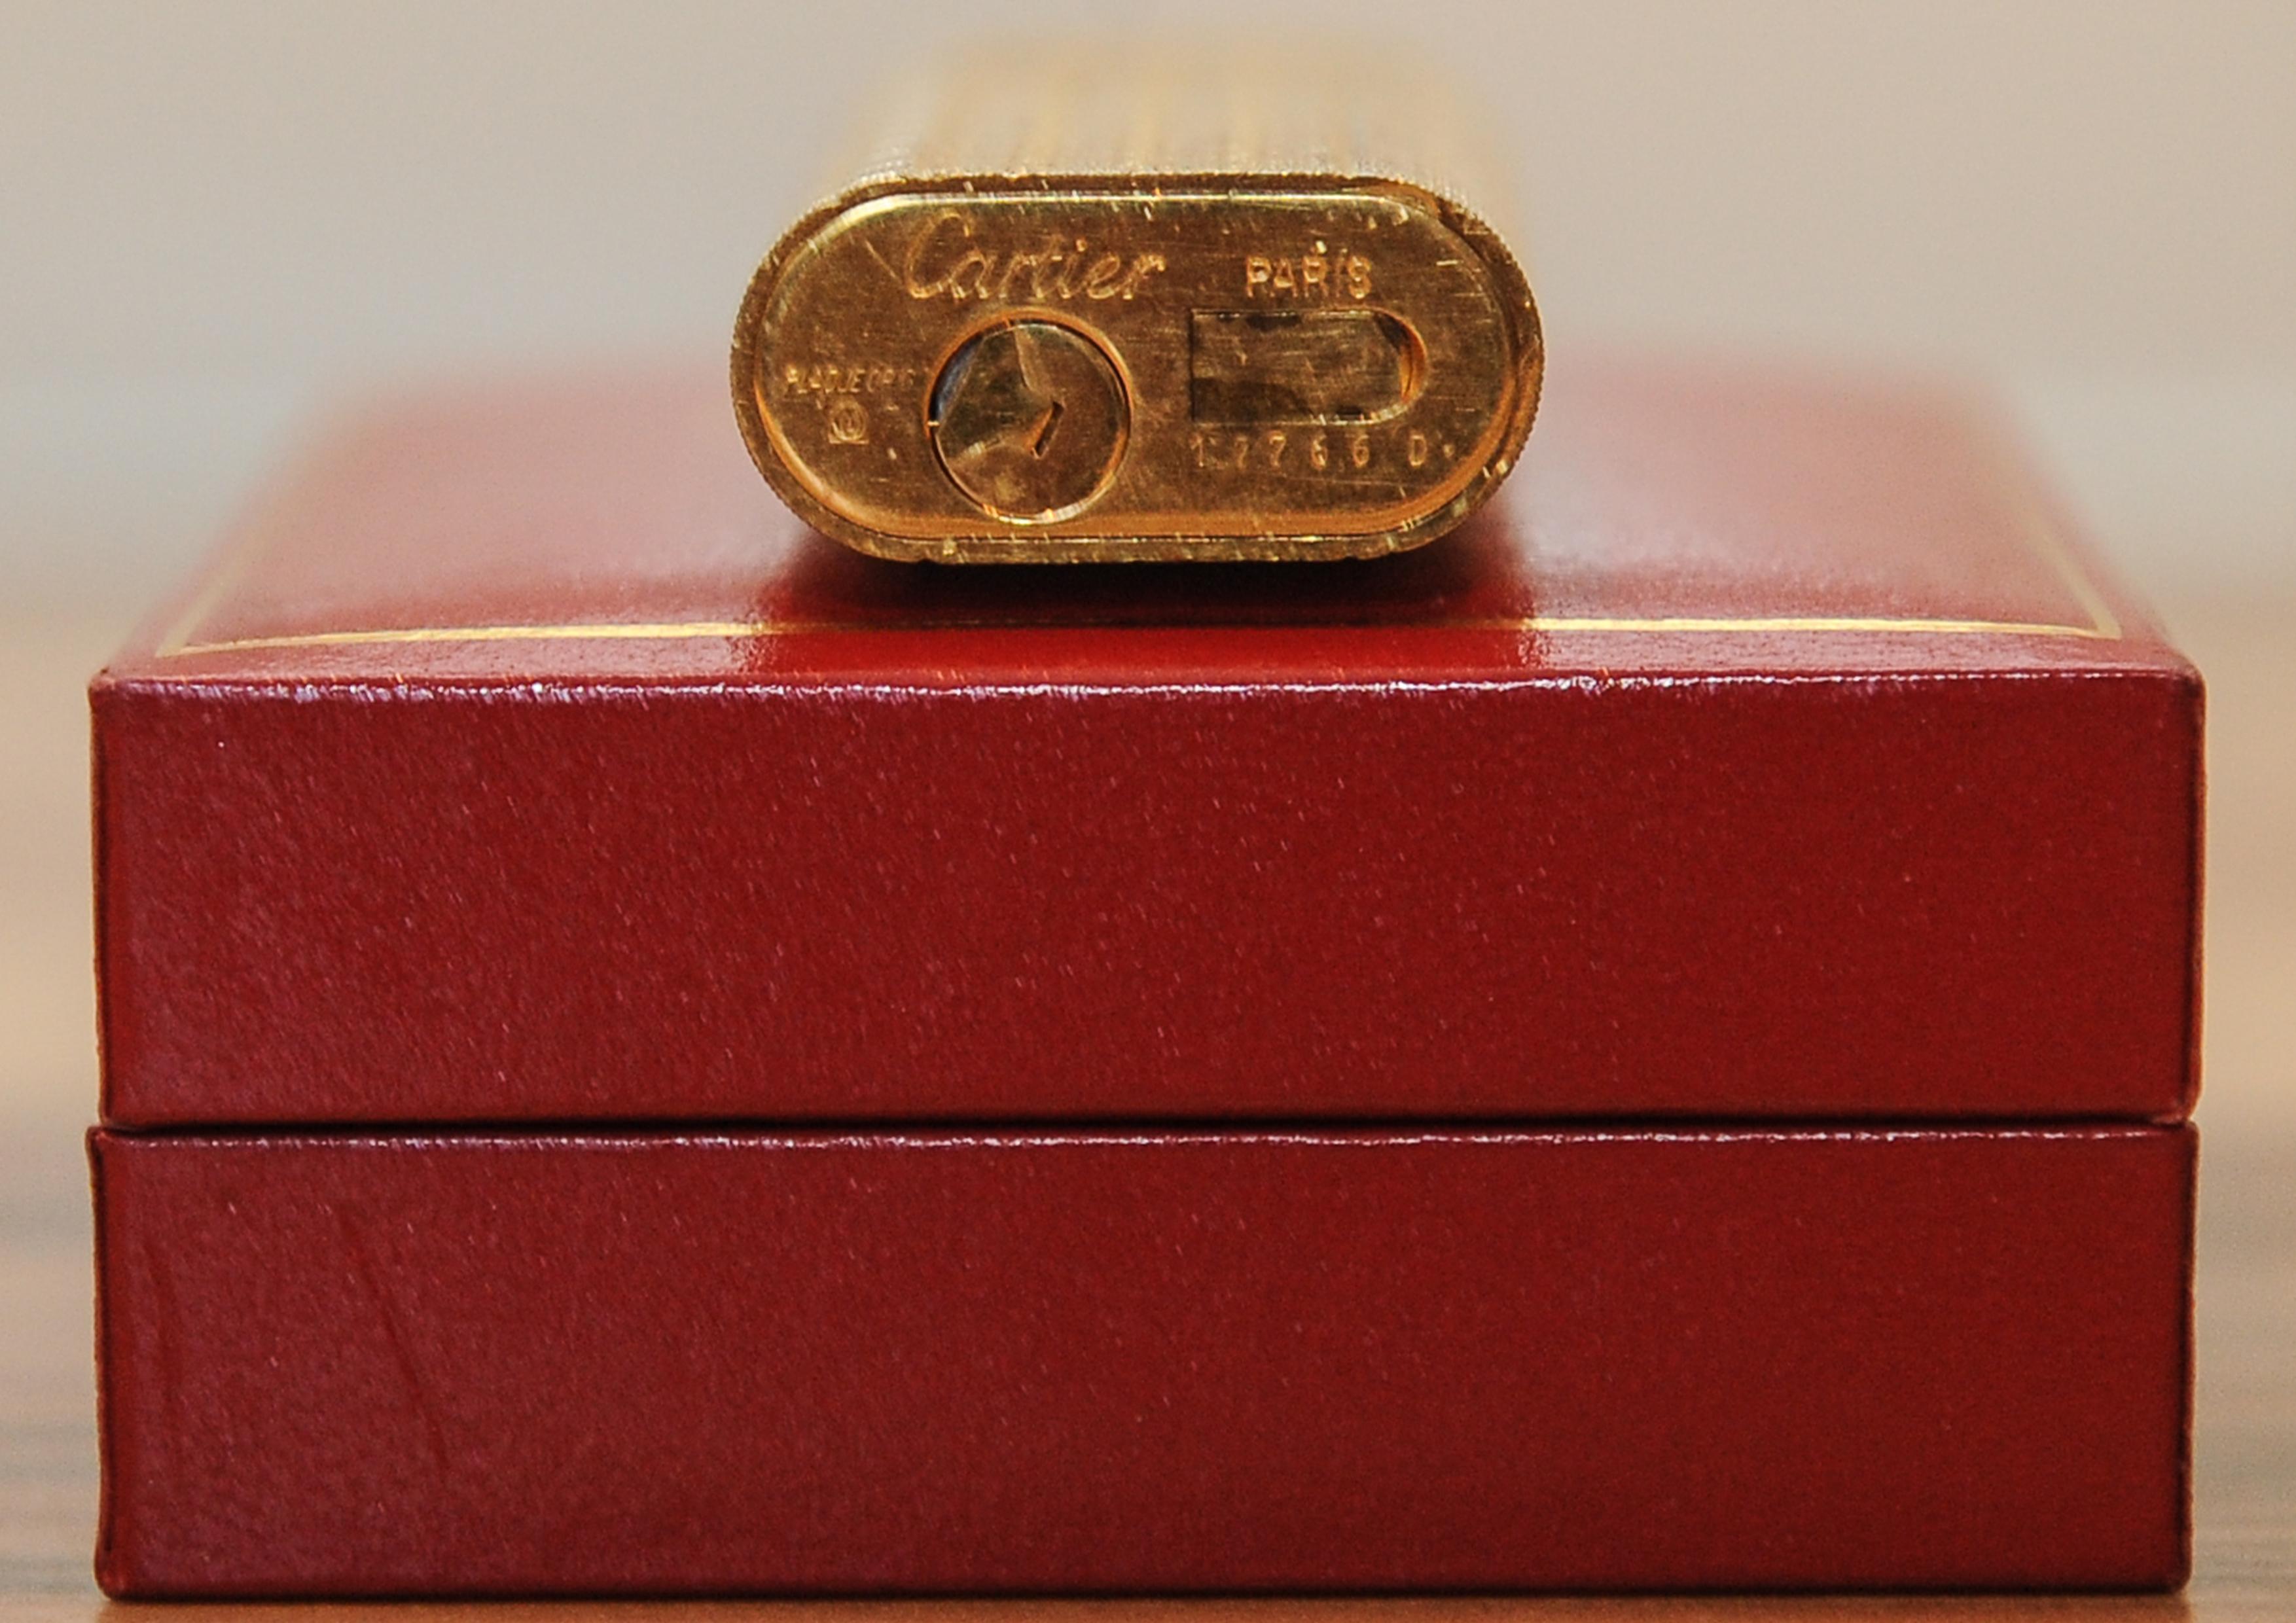 Art Deco Cartier Briquet Gas Gilt Cigarette Lighter With Original Box Made In France 1978